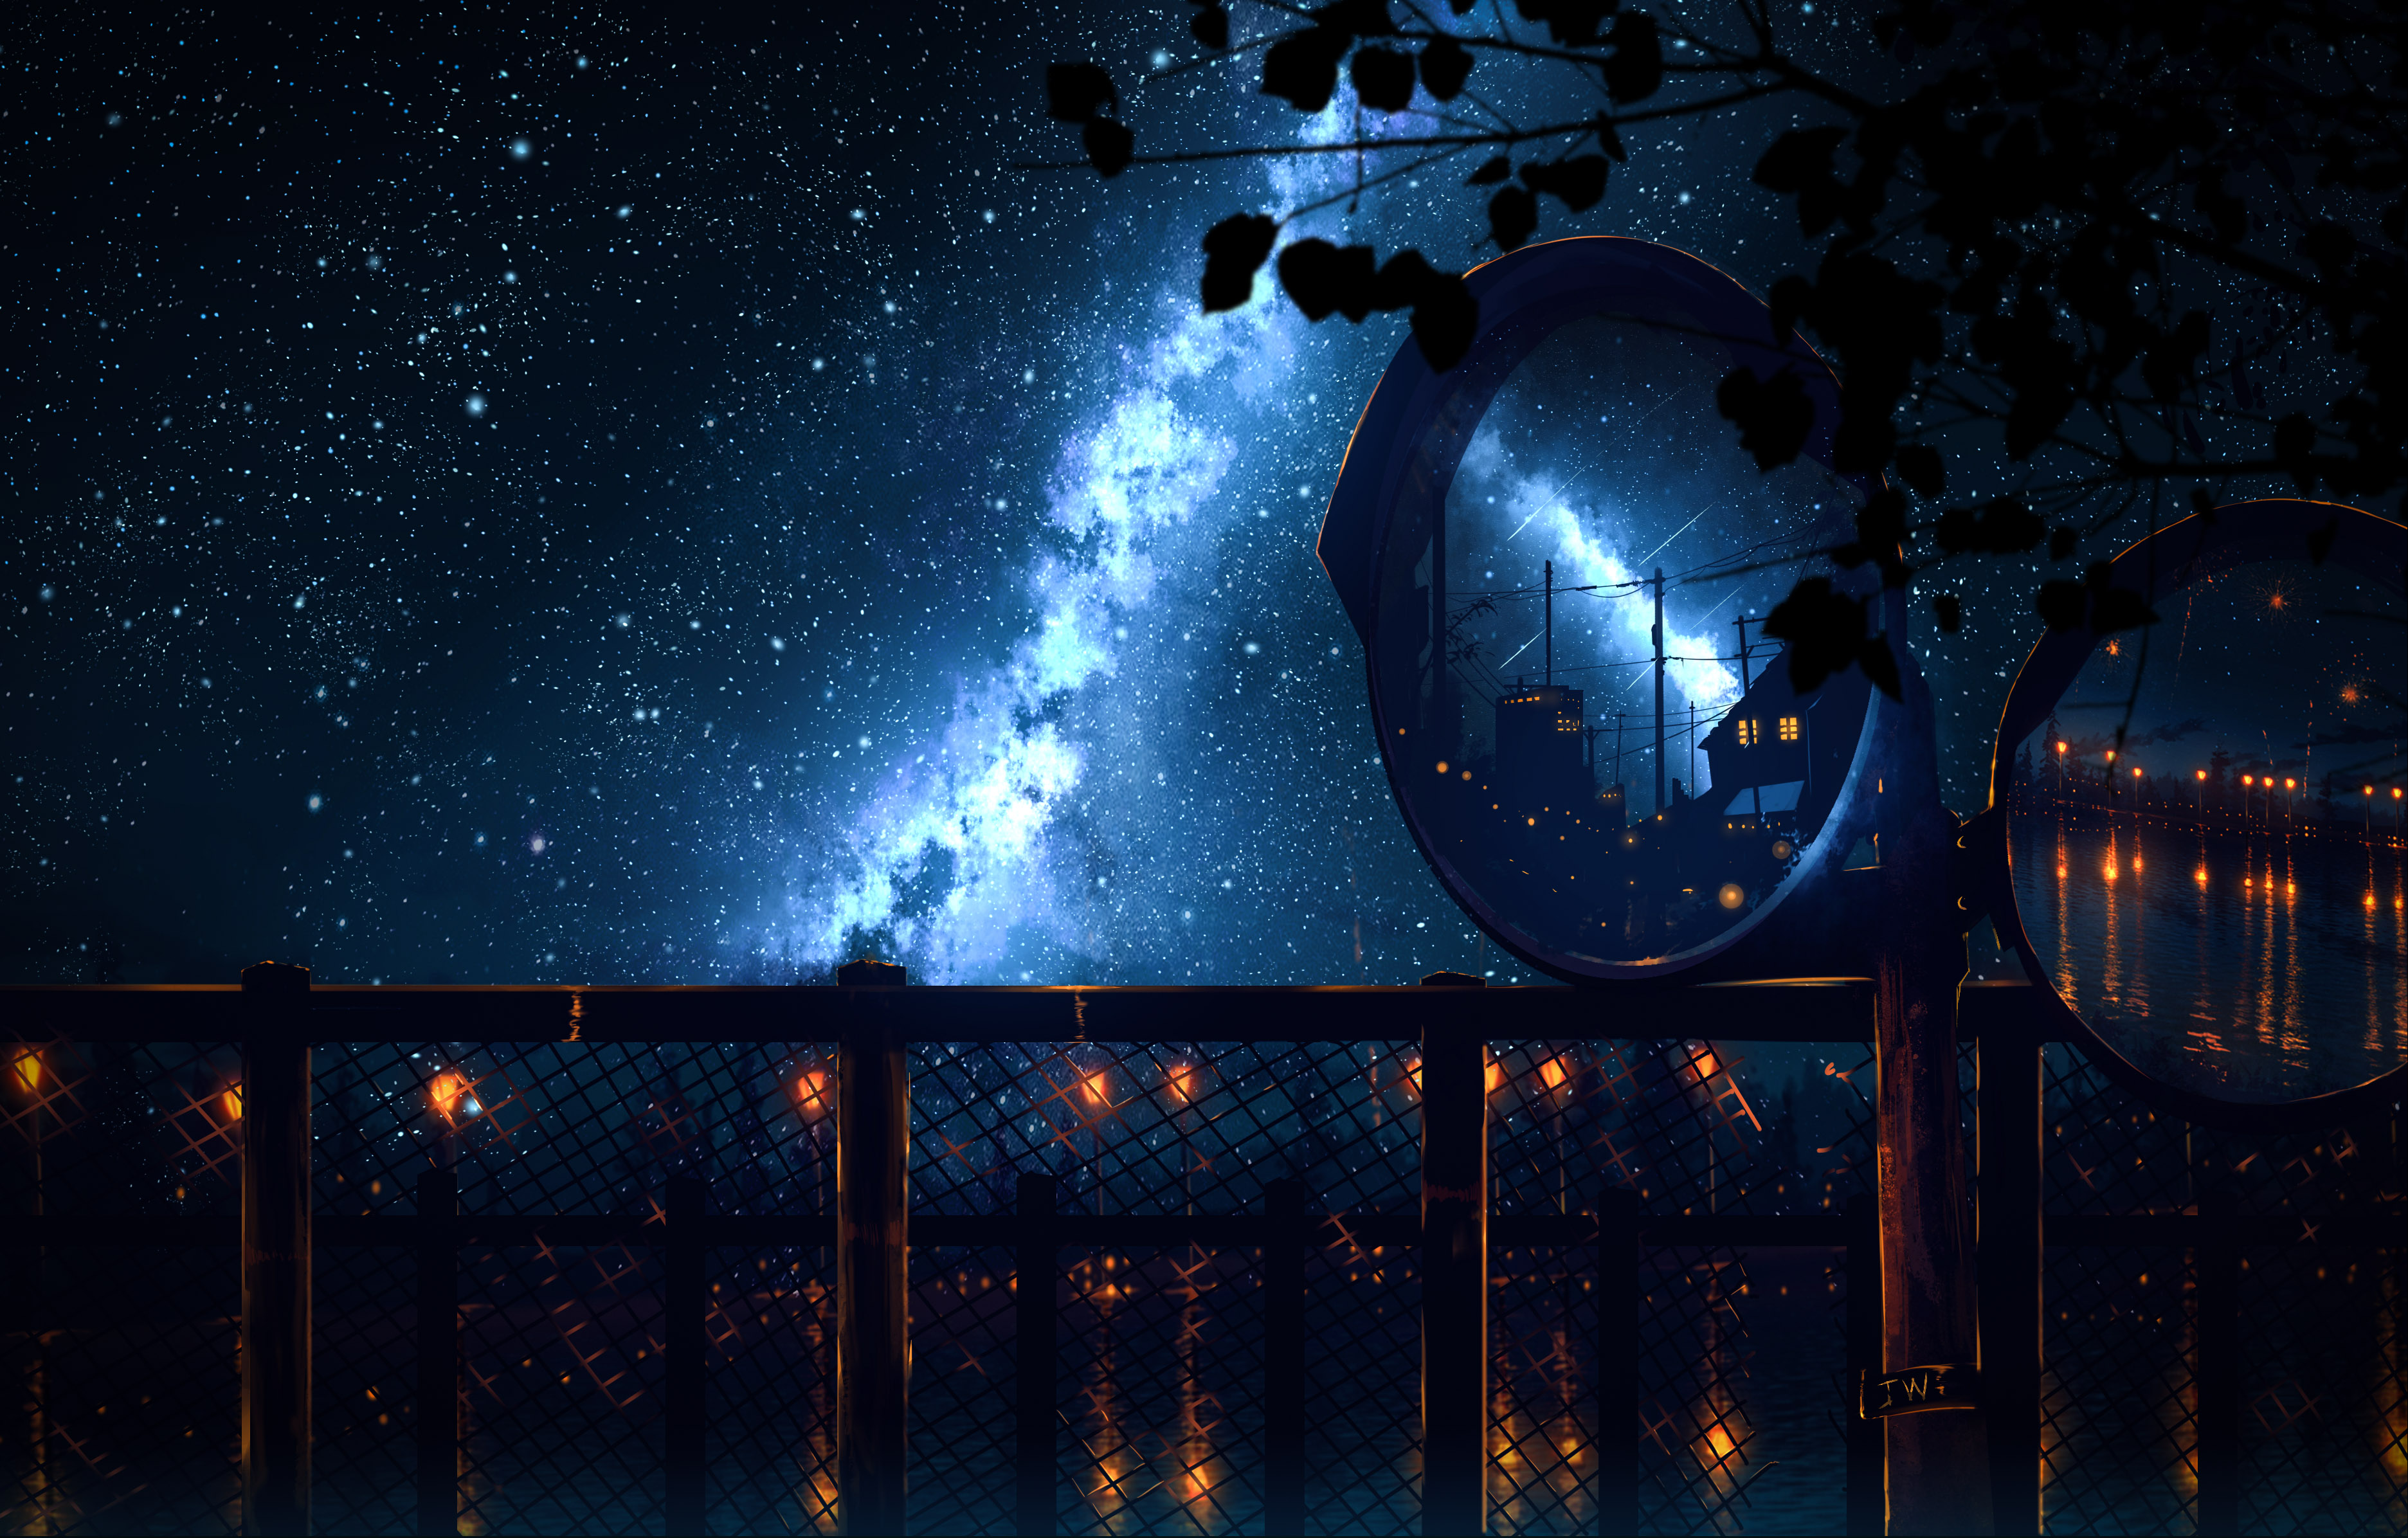 Anime 3745x2392 digital art stars mirror city lights trees Milky Way fence river